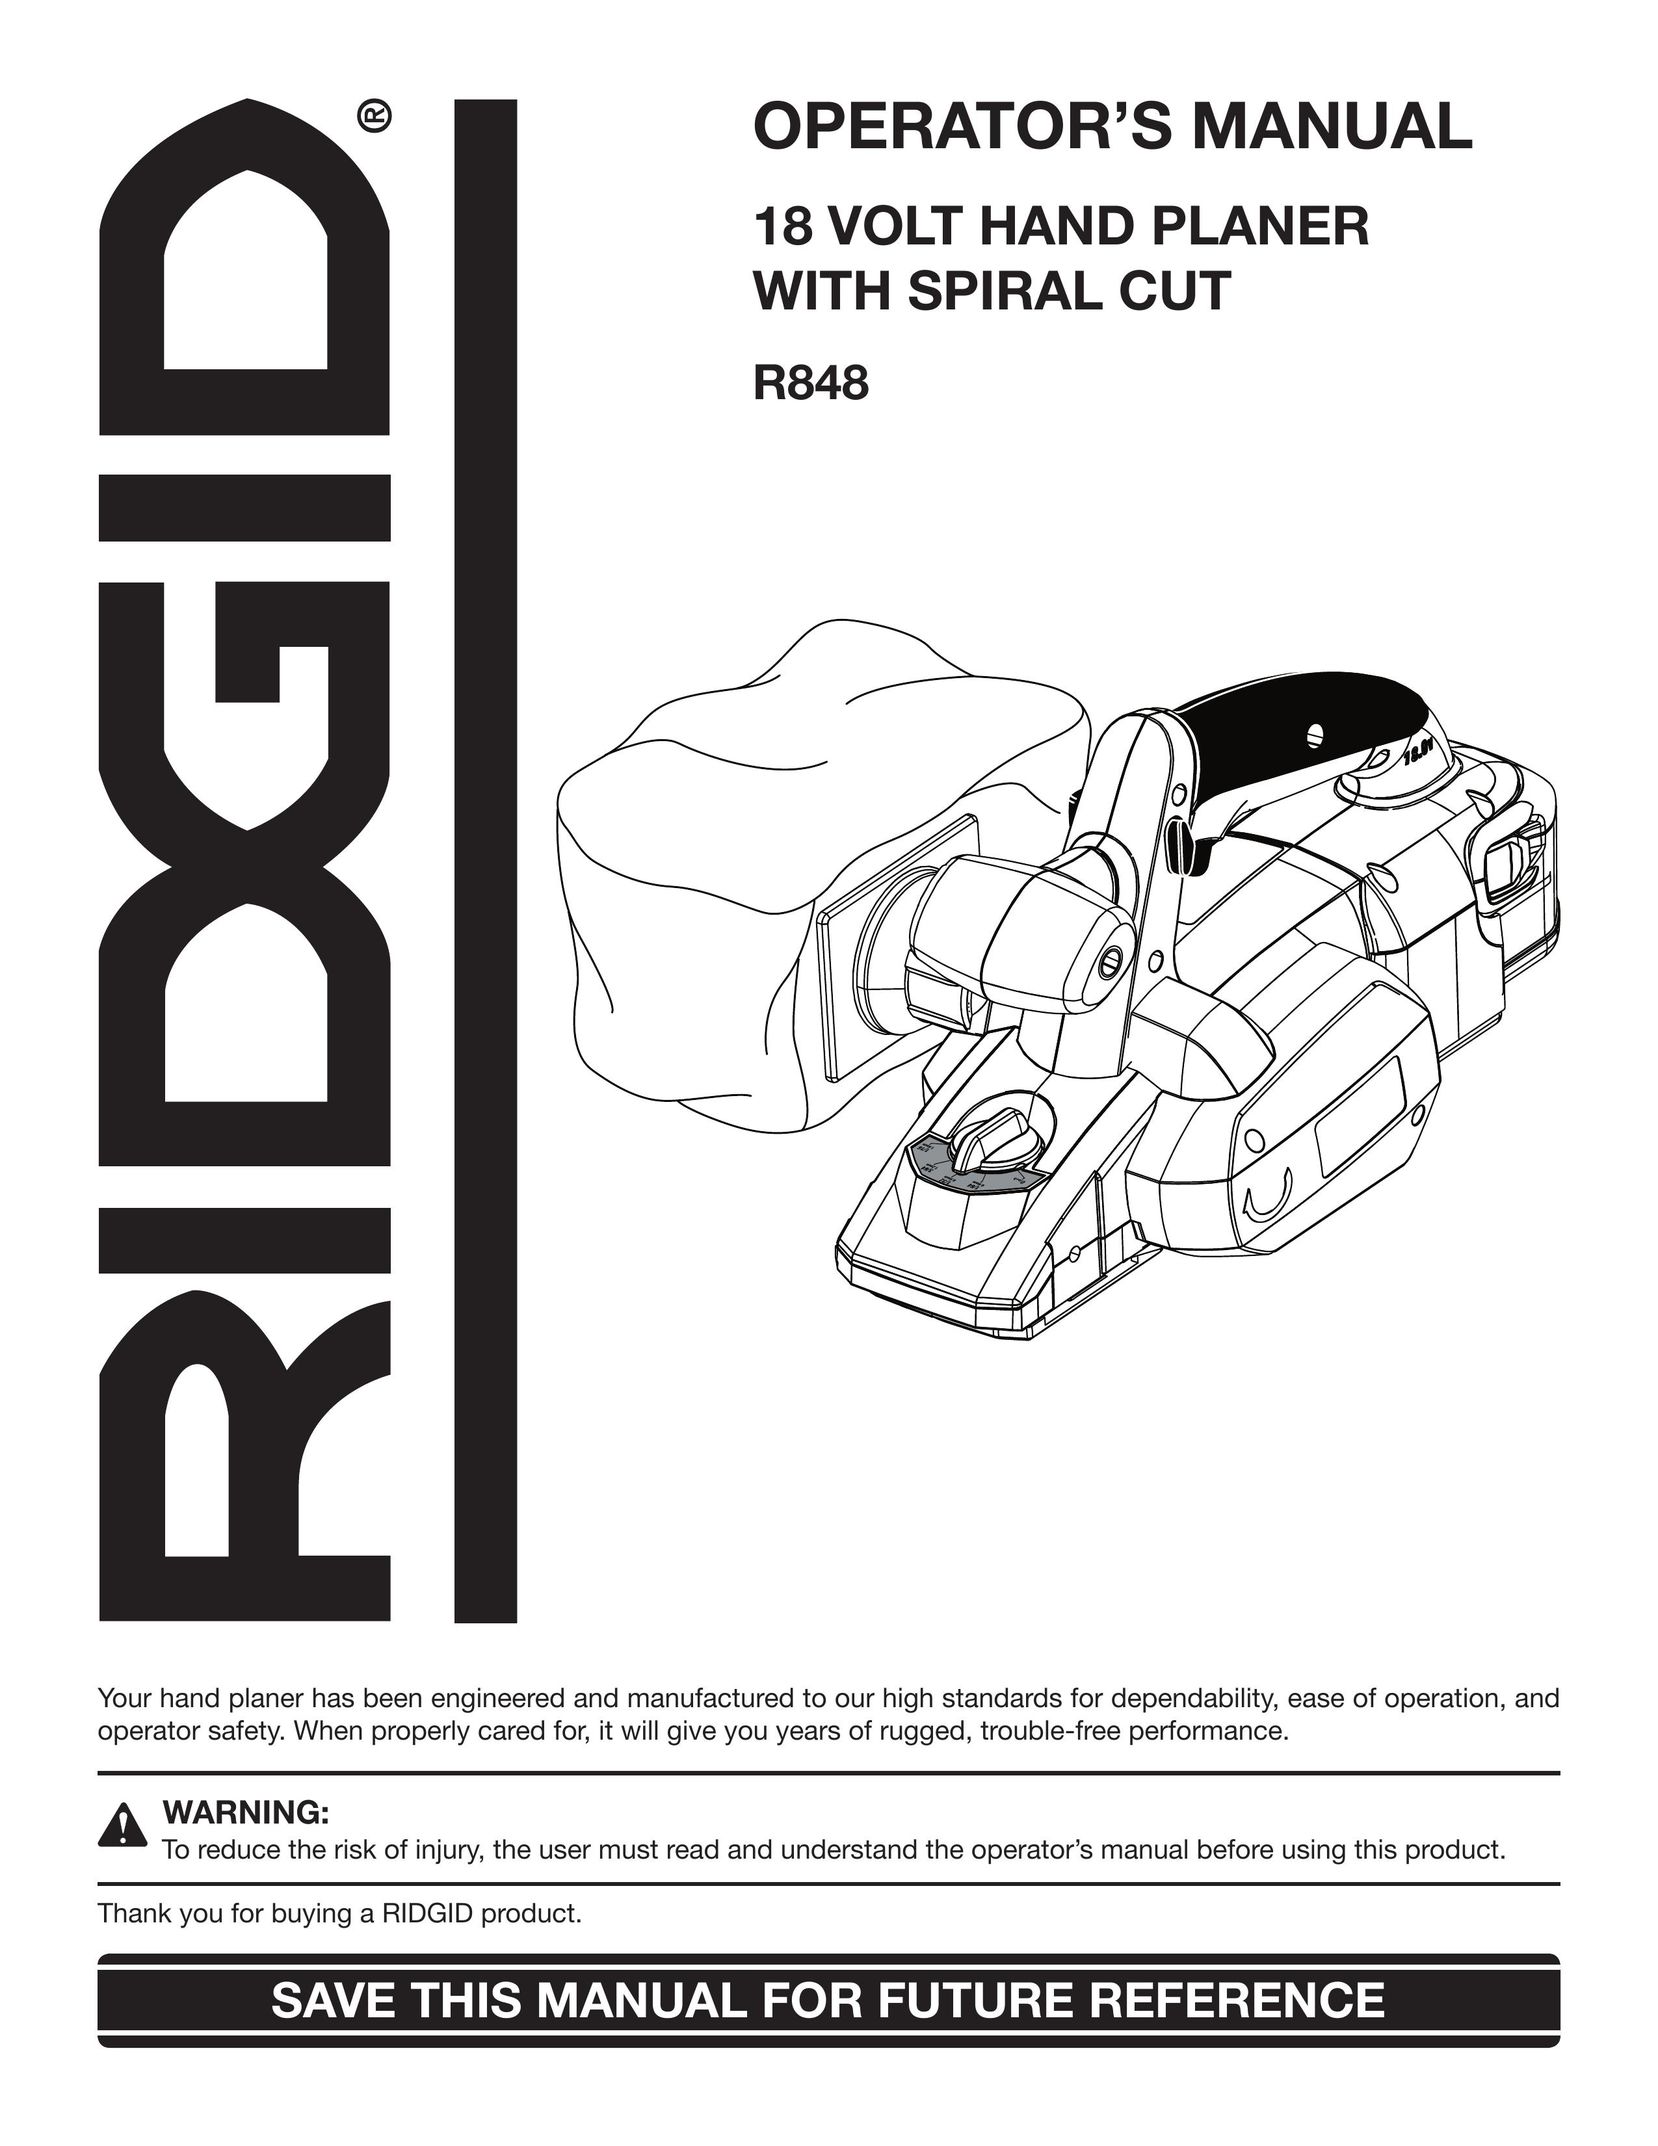 RIDGID R848 Planer User Manual